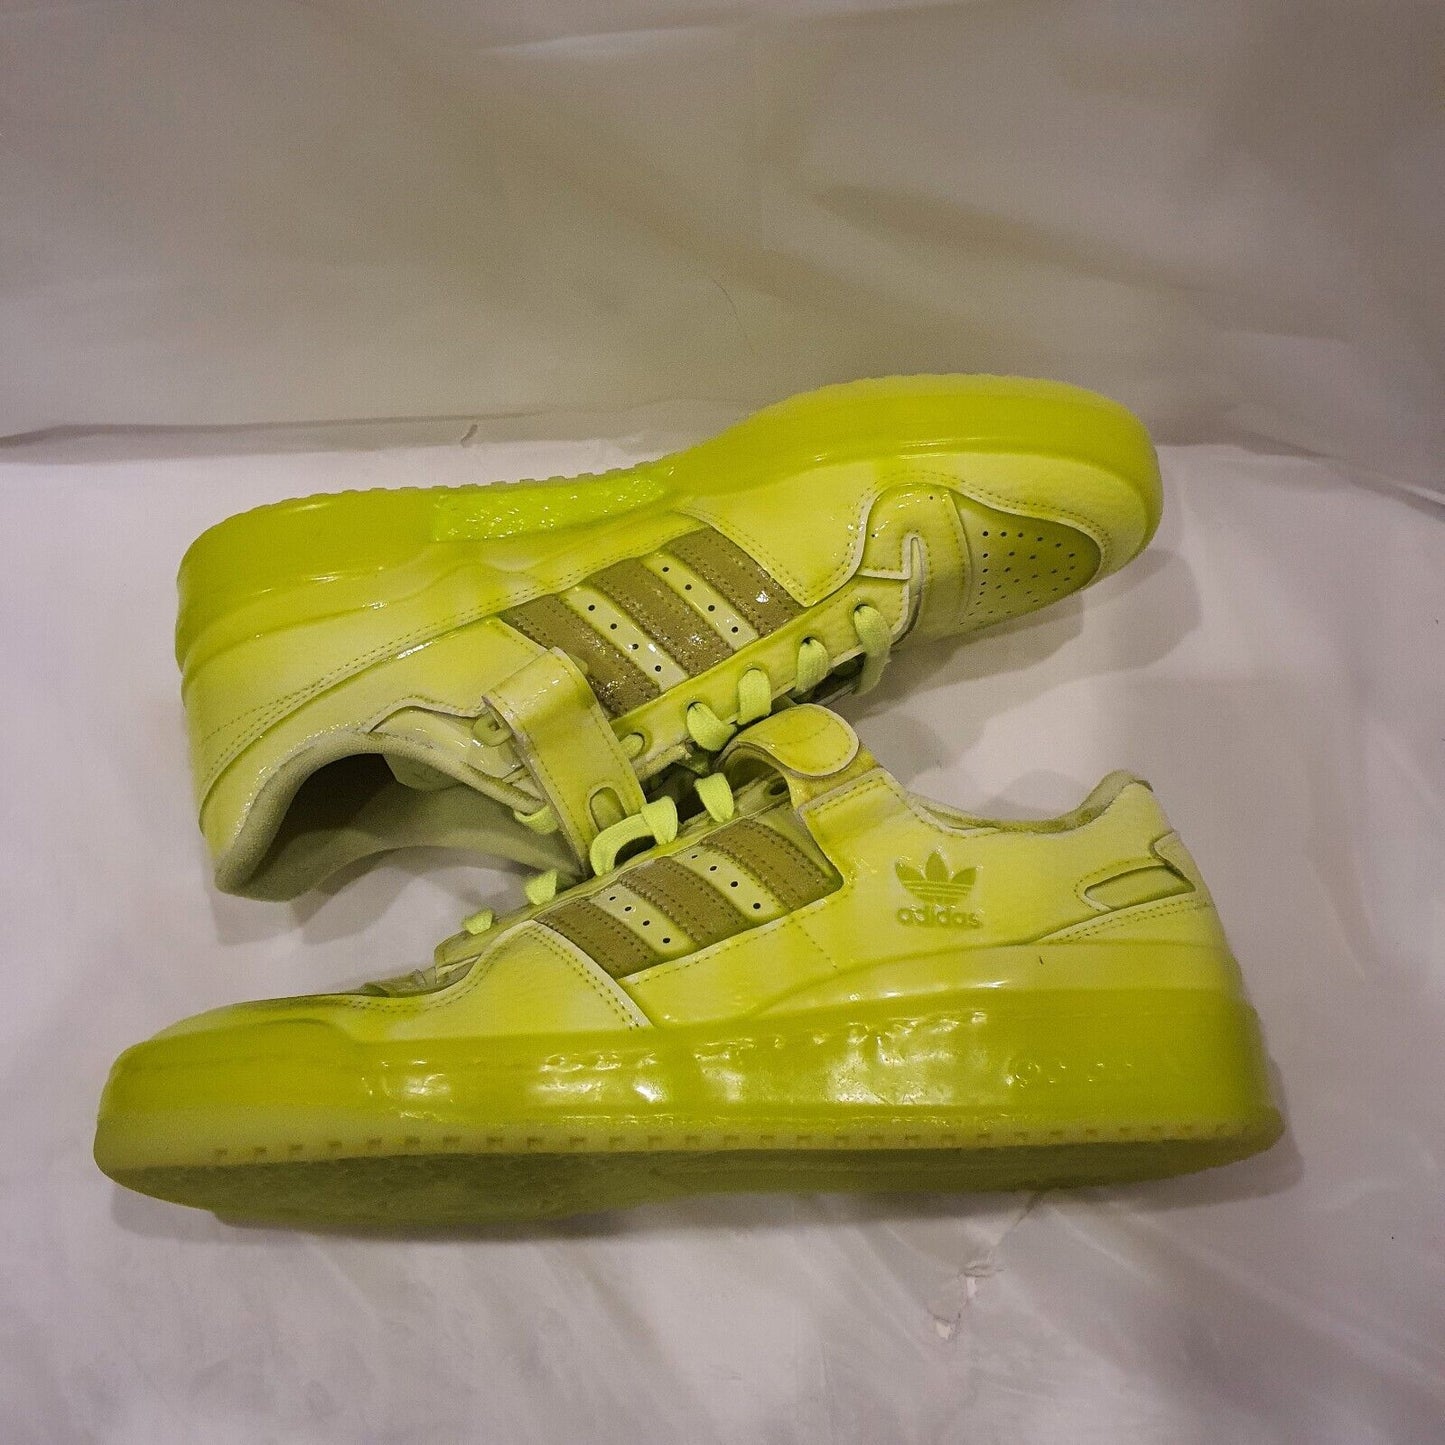 Jeremy Scott X Adidas Forum Low Dipped - Yellow Fluorescent US Men 11